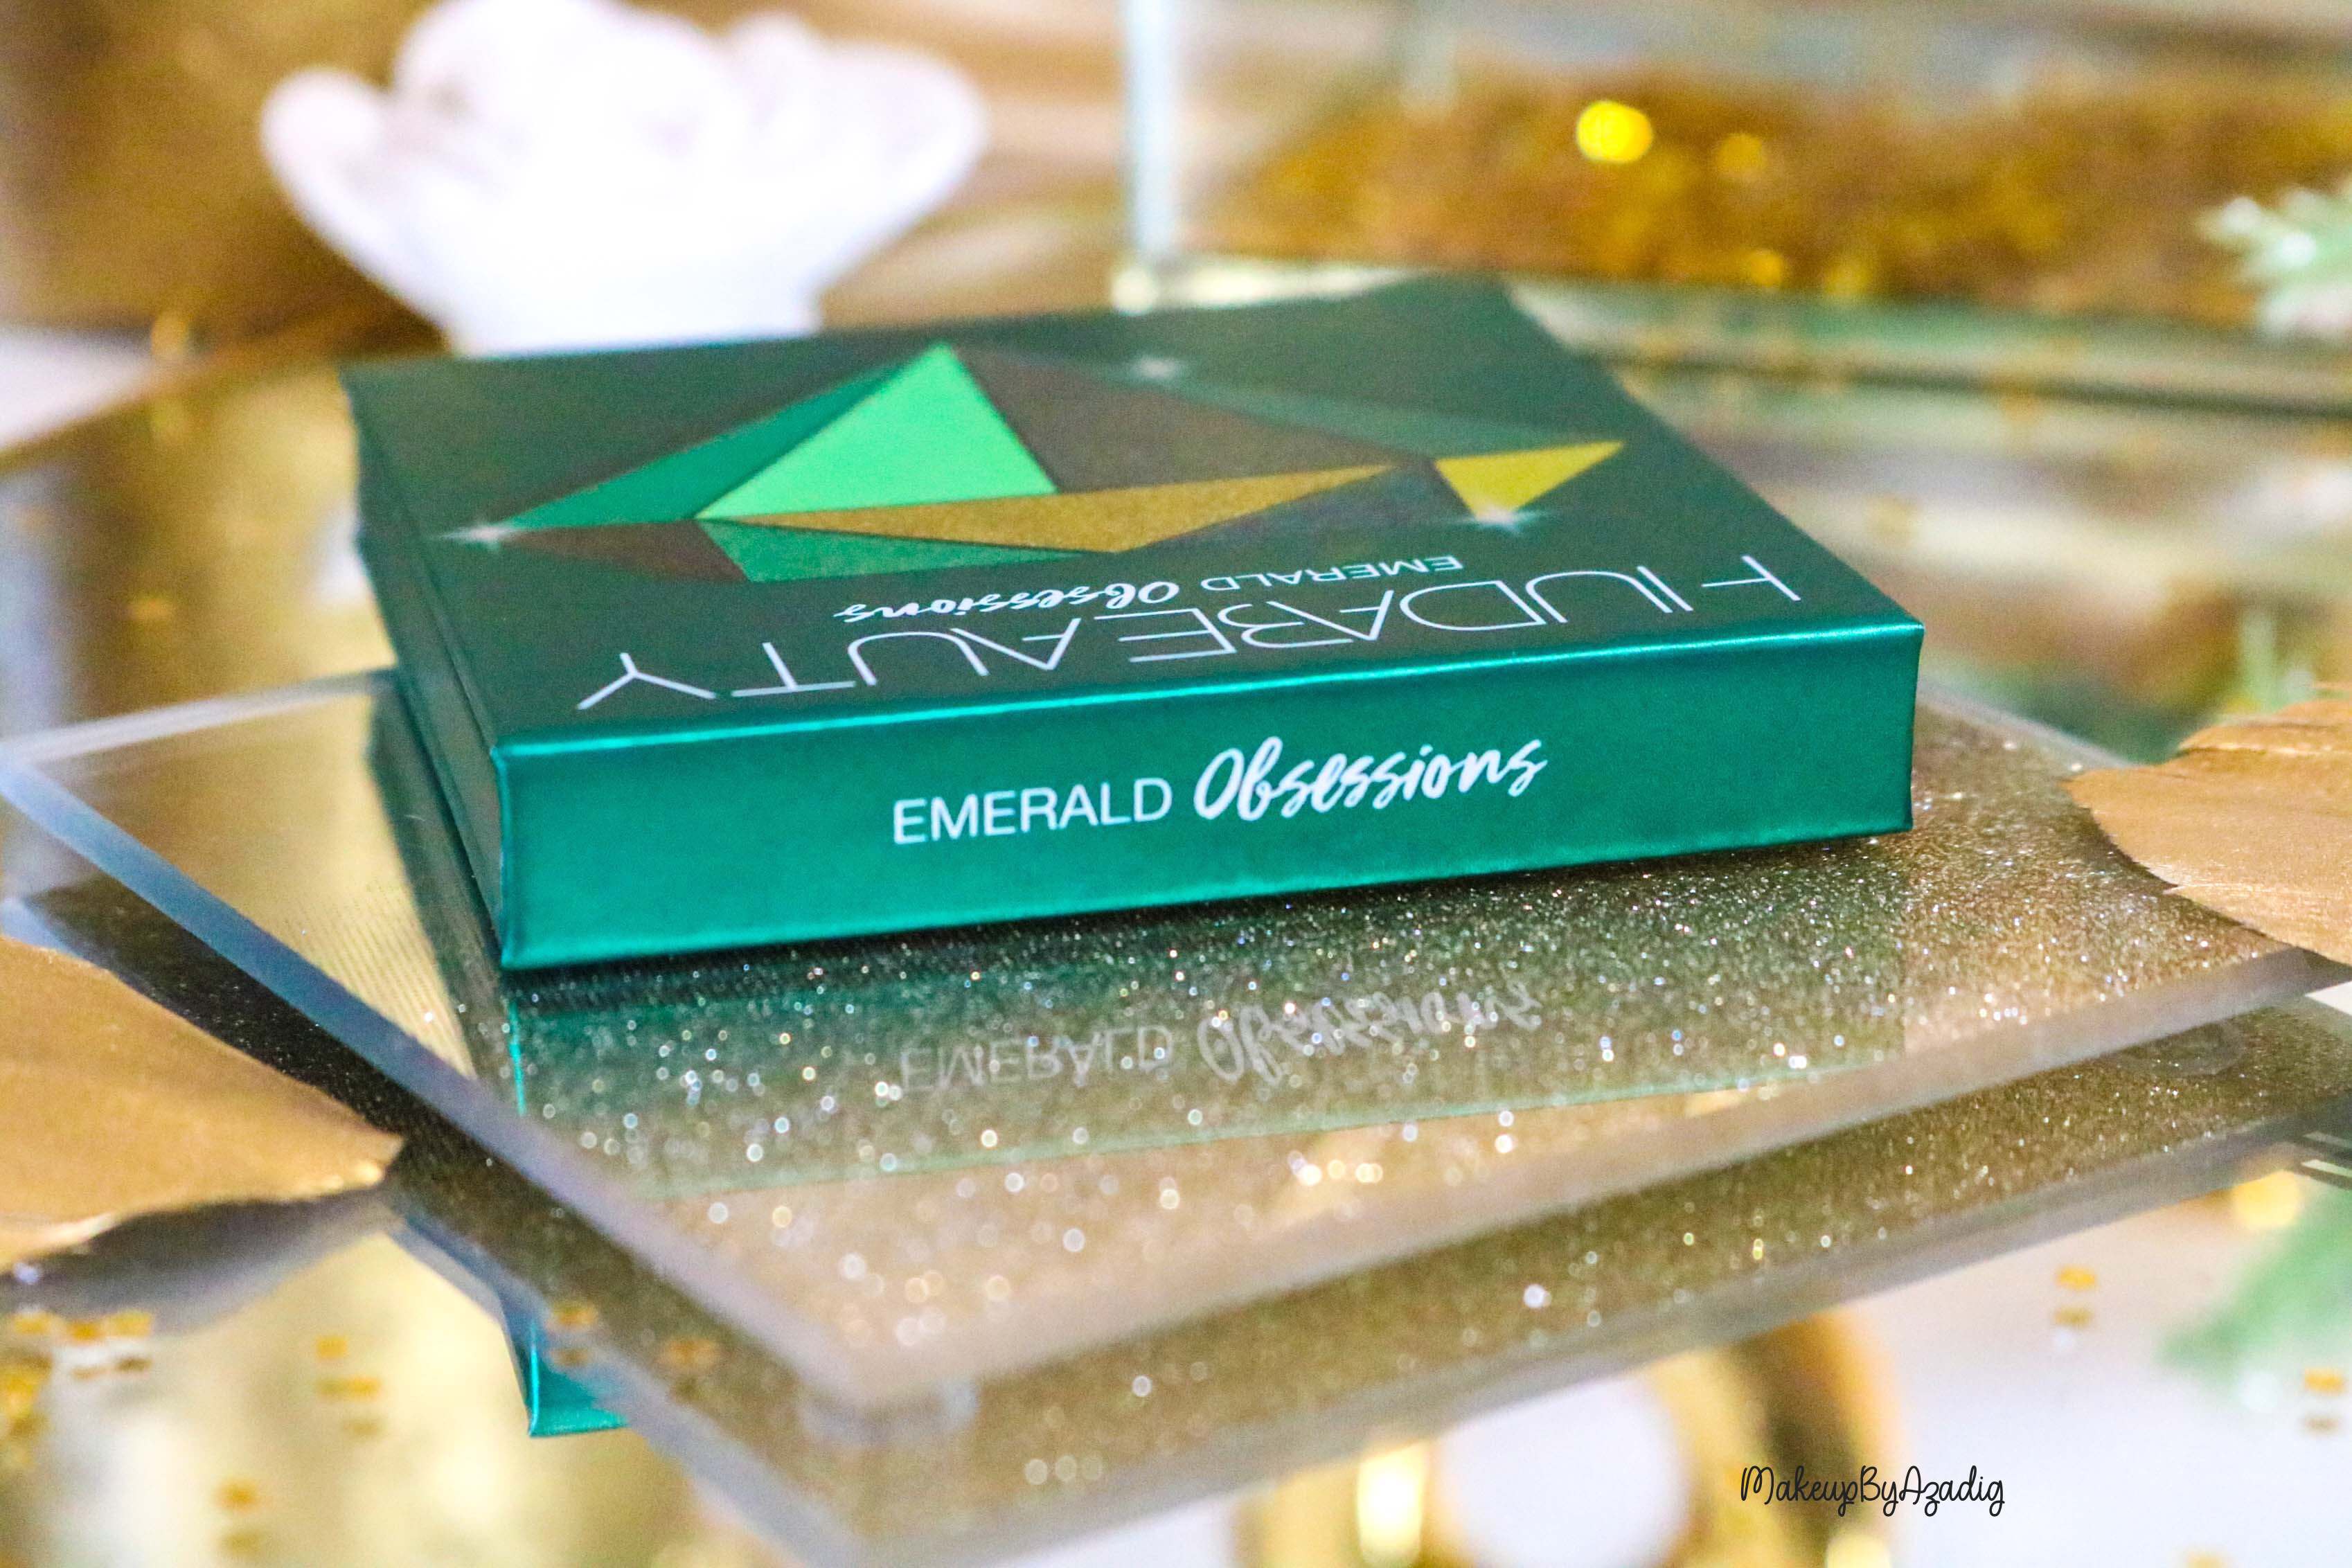 revue-review-palette-emerald-obsessions-huda-beauty-topaz-sapphire-avis-prix-swatch-makeupbyazadig-meilleure-packaging